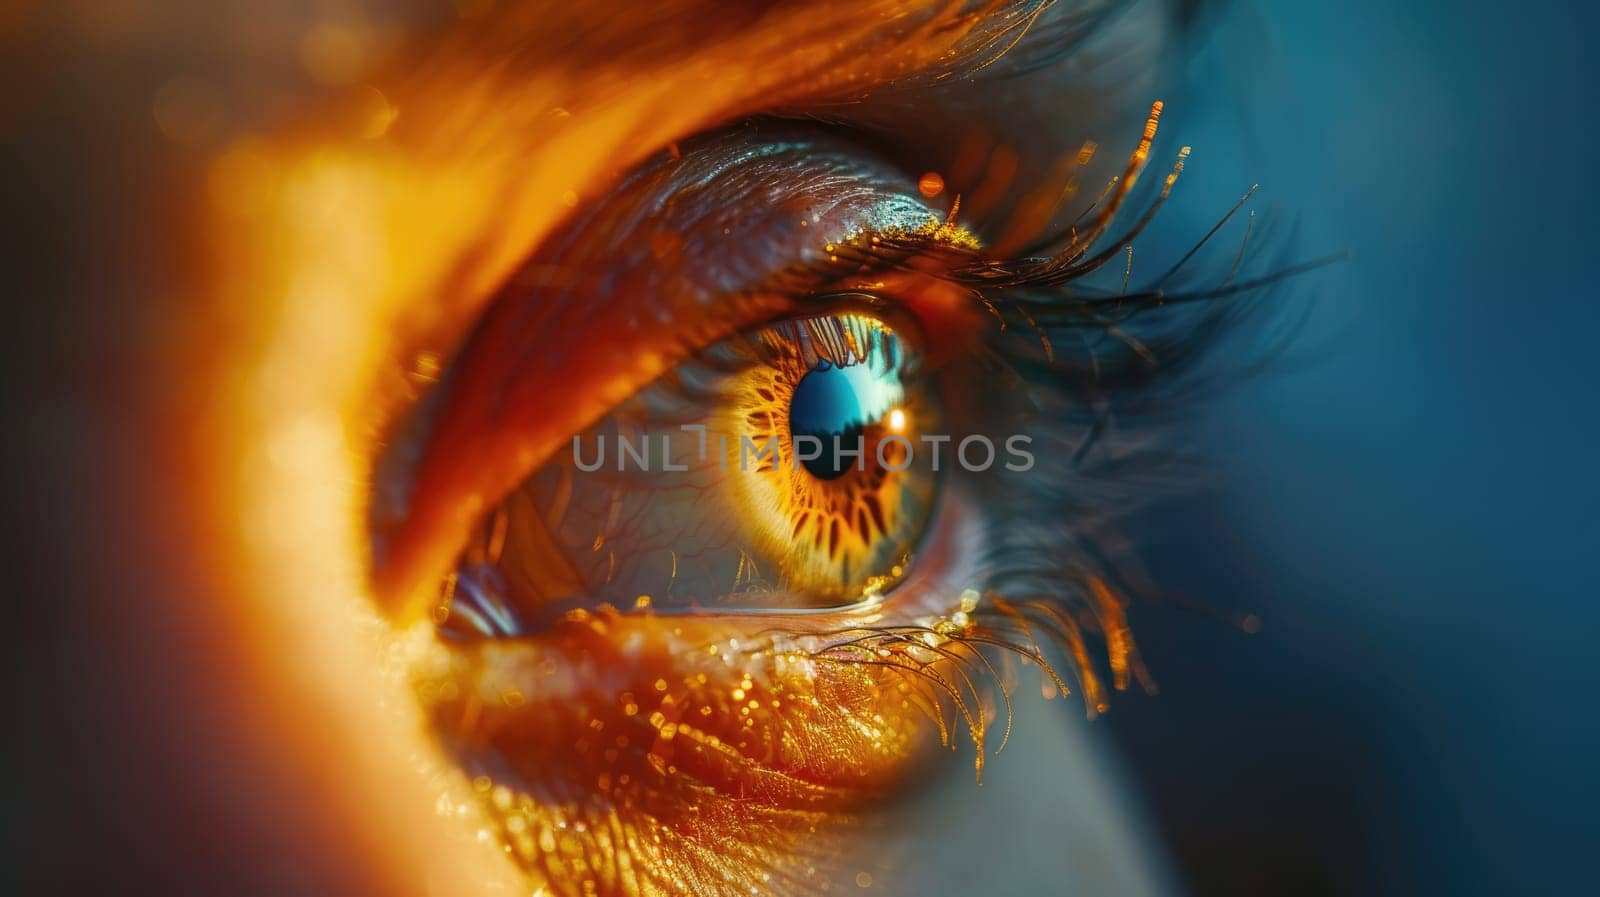 Macro view of the eye and pupil. Perfect vision. Abstract art image by natali_brill